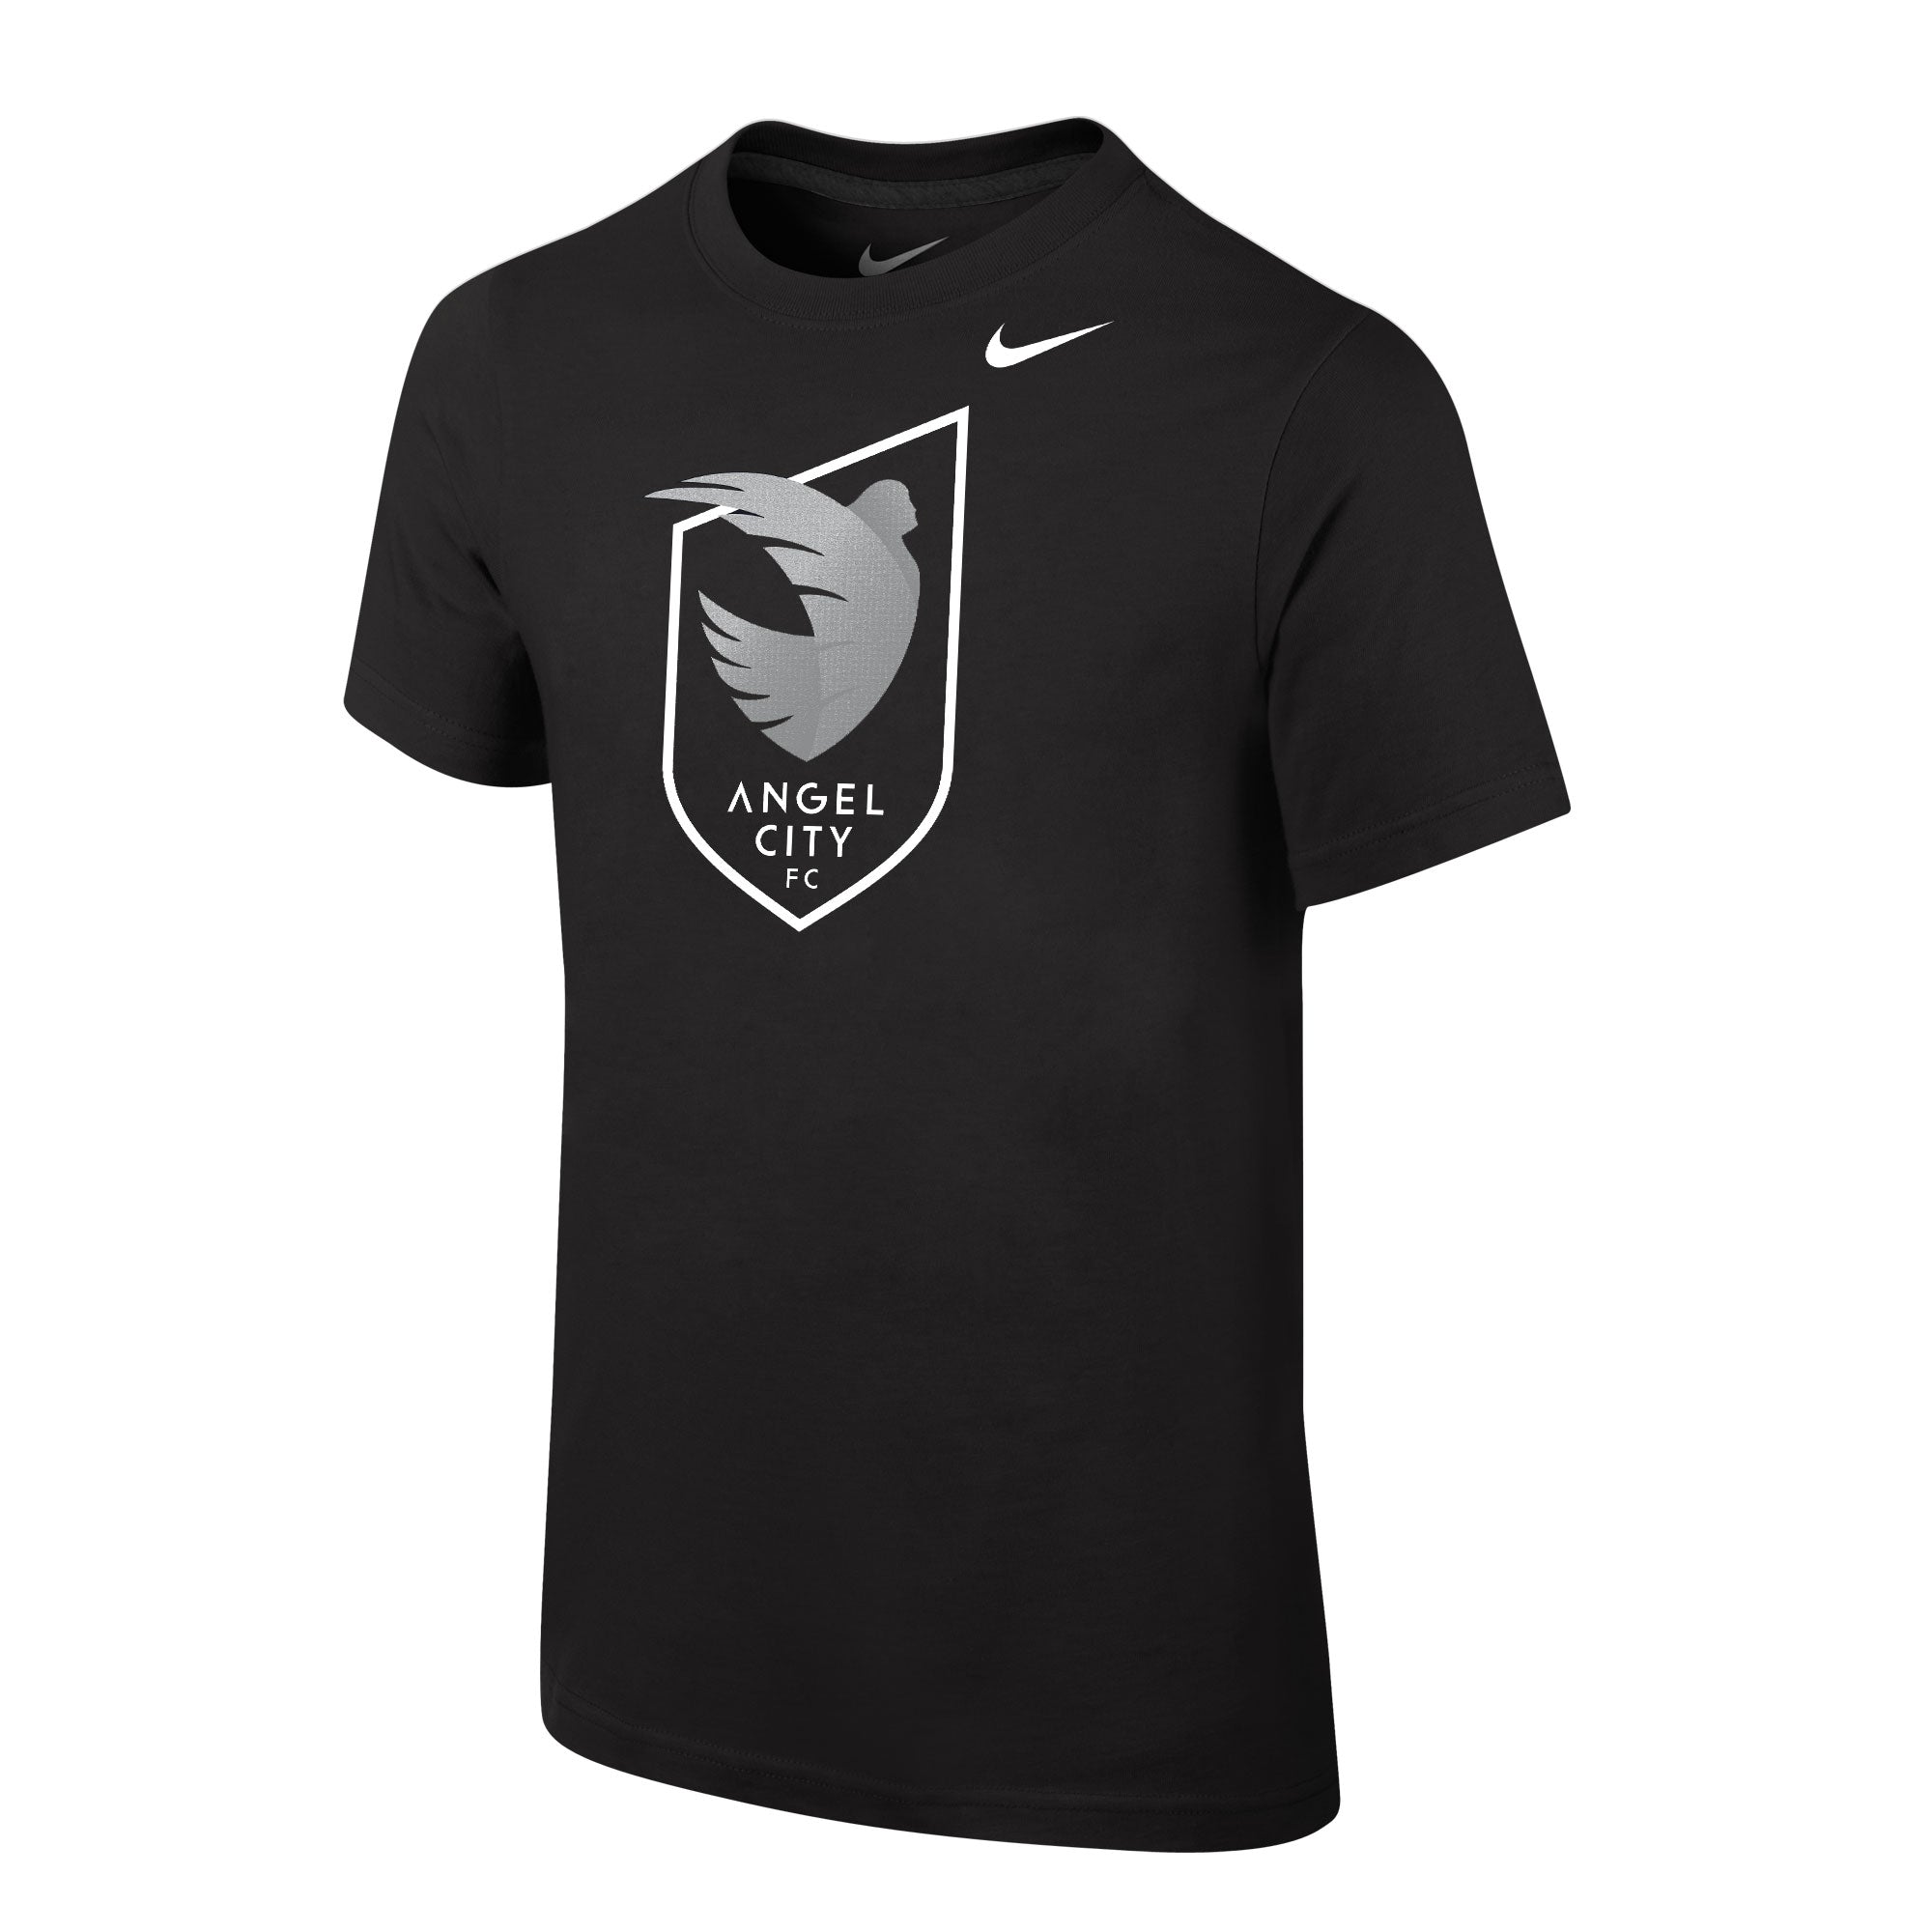 Angel City FC Nike Youth Armor Crest camiseta negra de manga corta